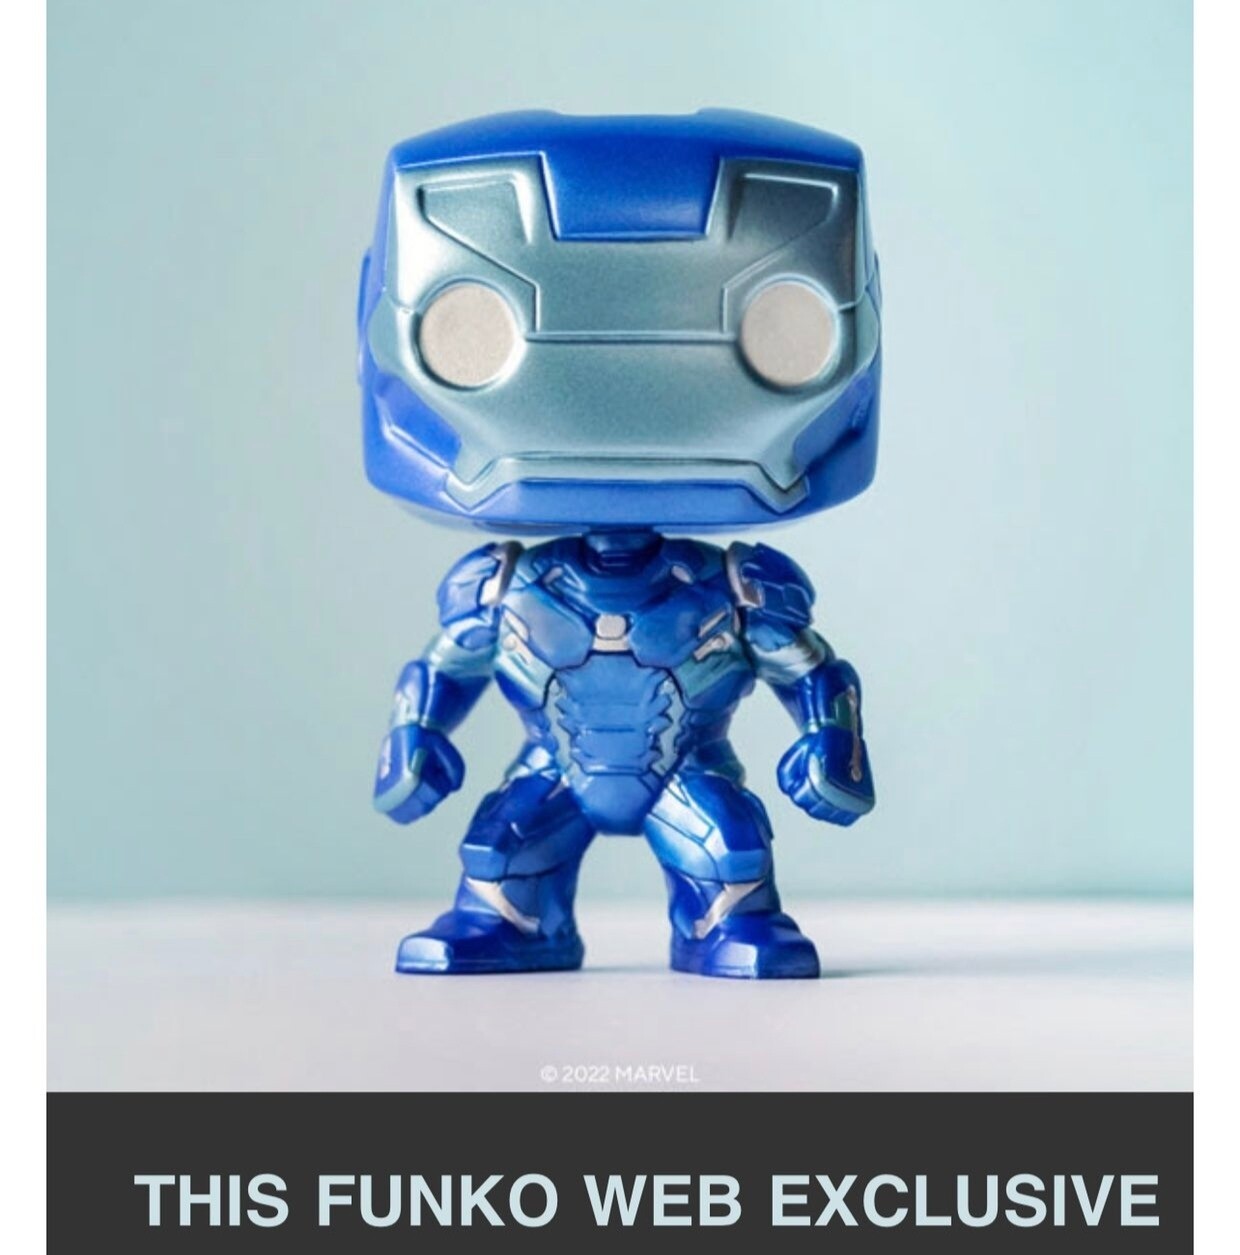 Funko Pop Iron Man Exclusivo de Funko Shop (Make a Wish)